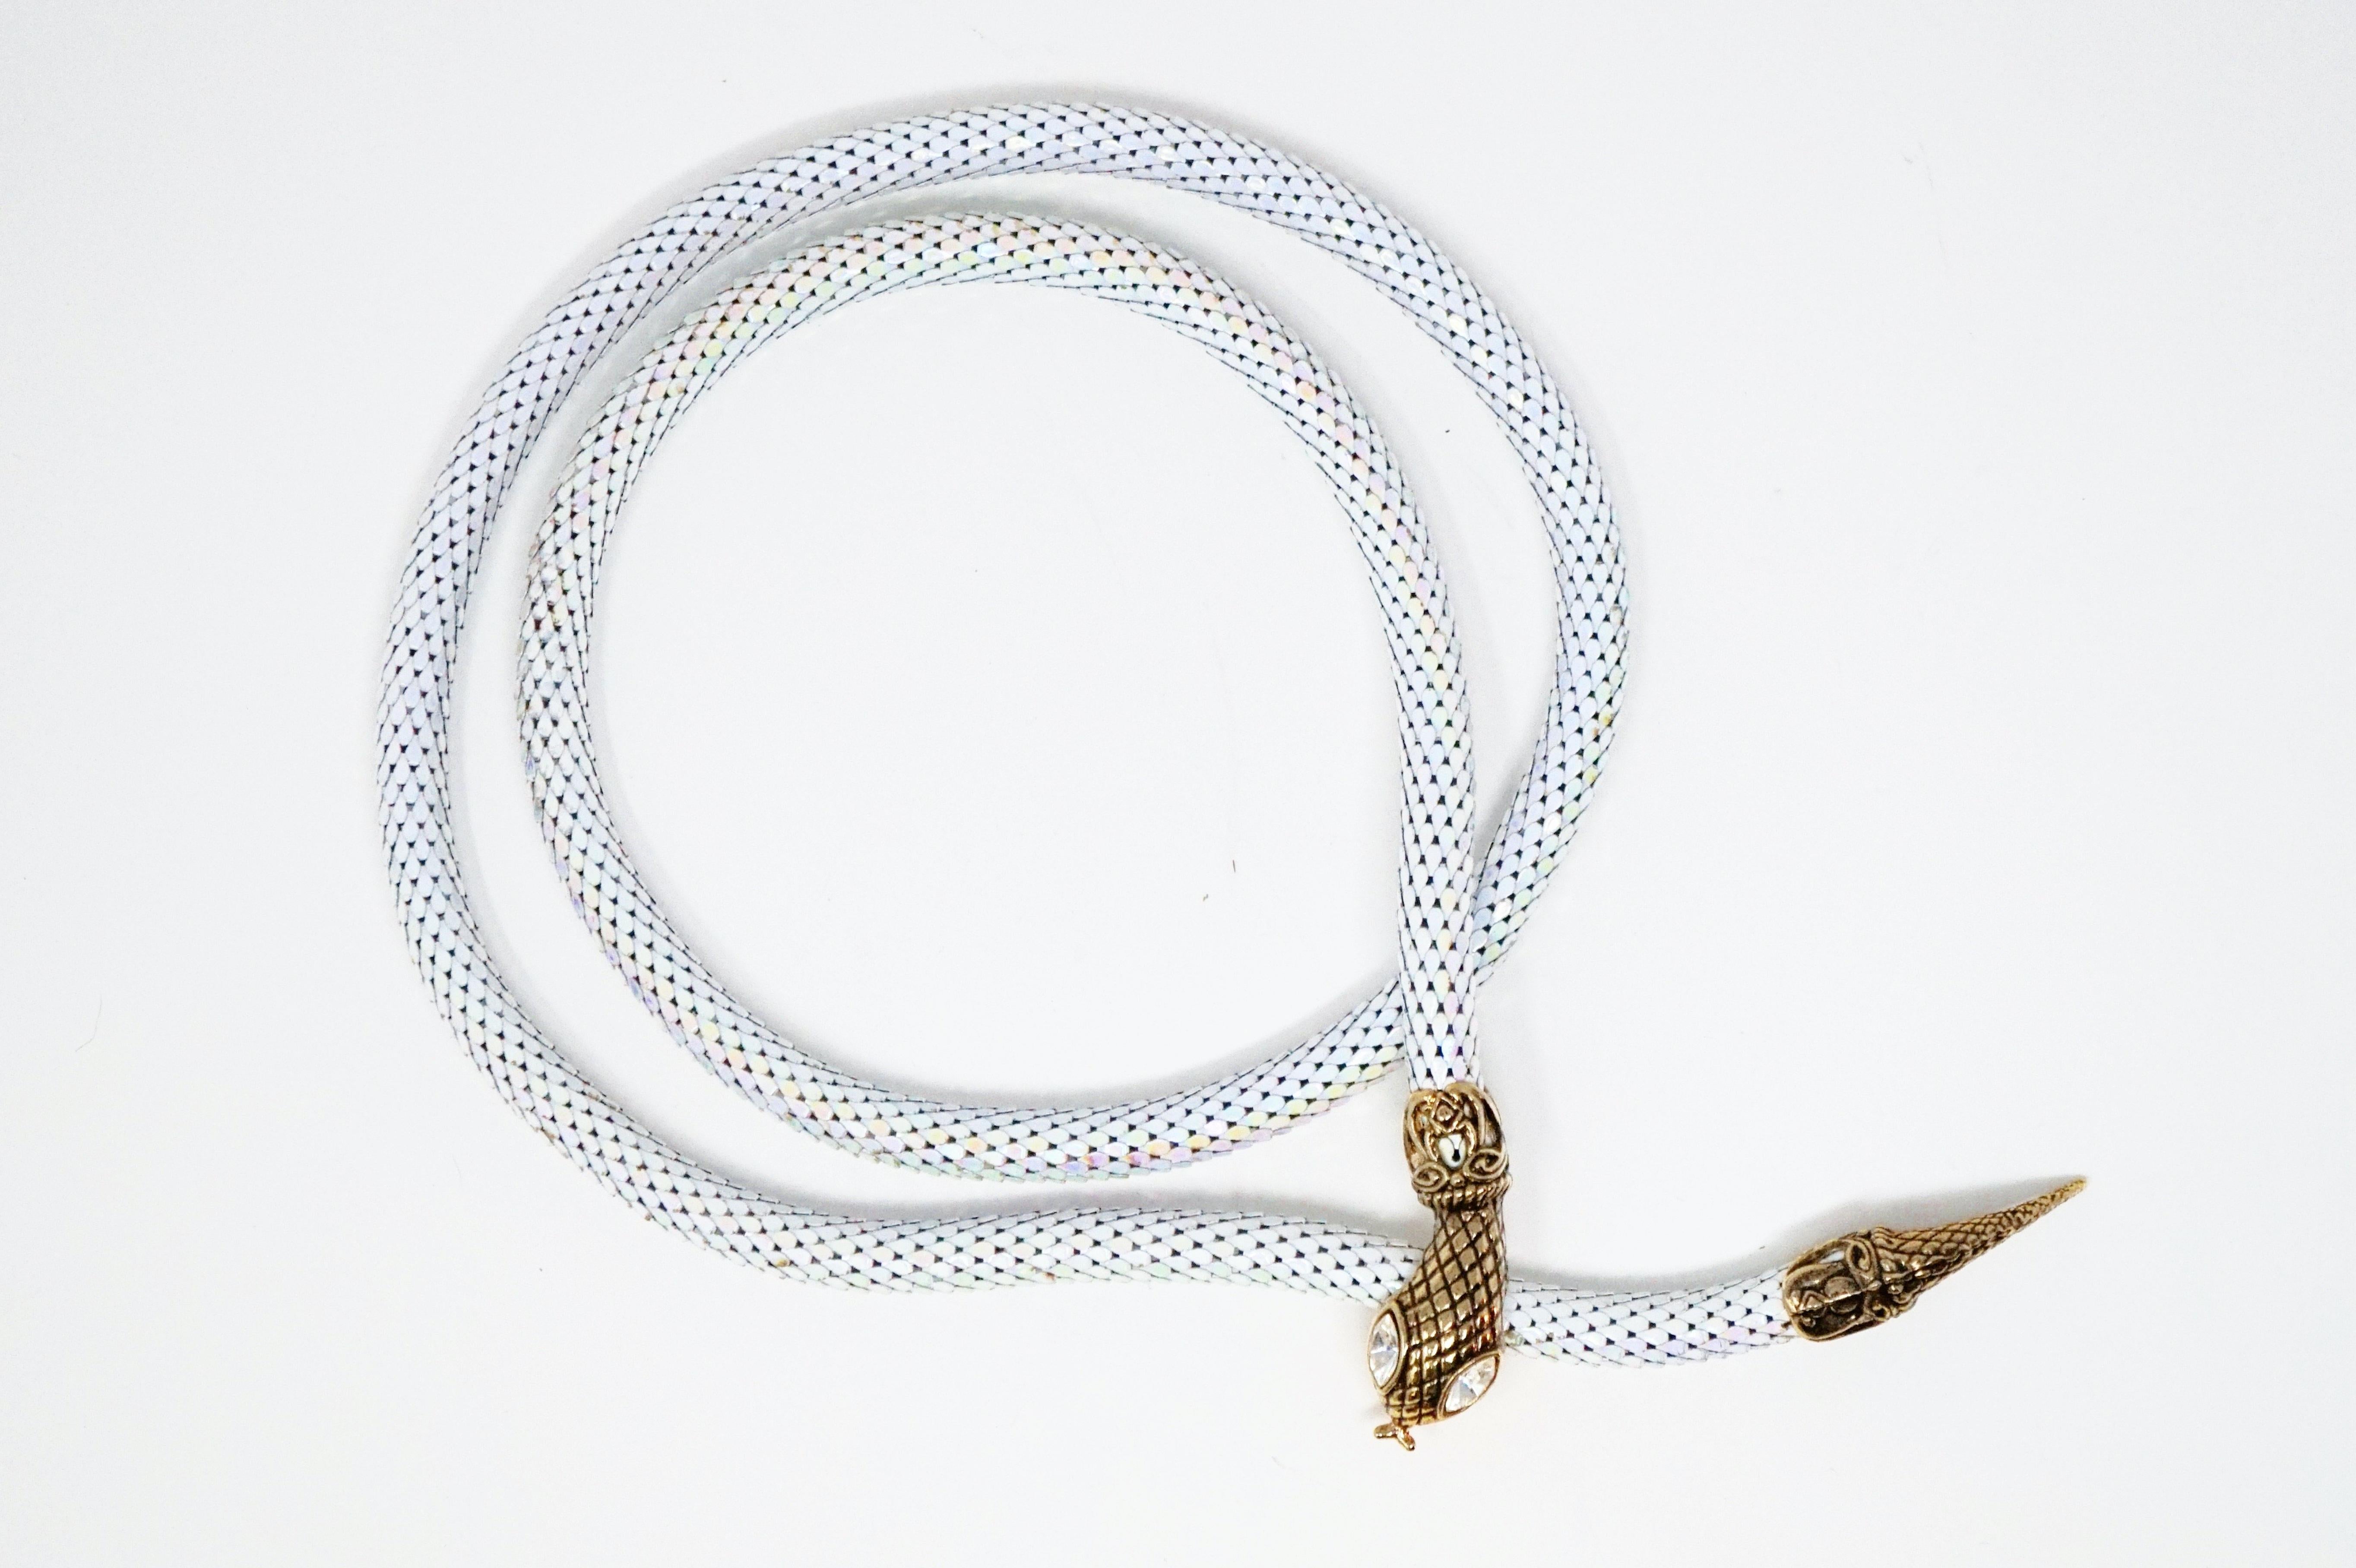 1980s Iridescent Mesh Snake Belt or Necklace by DL Auld Co, Signed 5